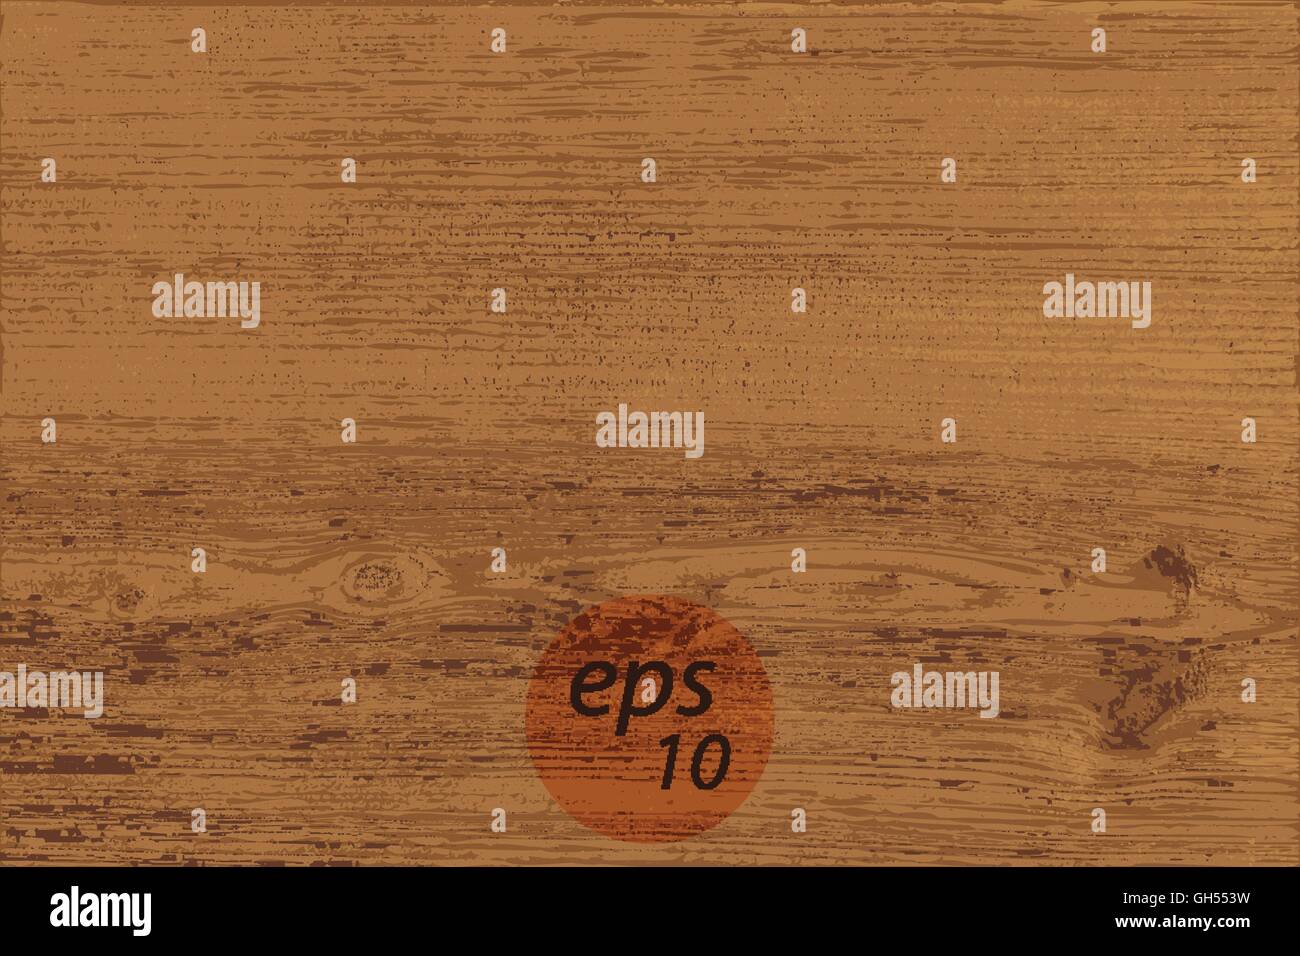 Grunge old wood texture. Eps 10 illustration. Natural grunge wooden background. Stock Vector